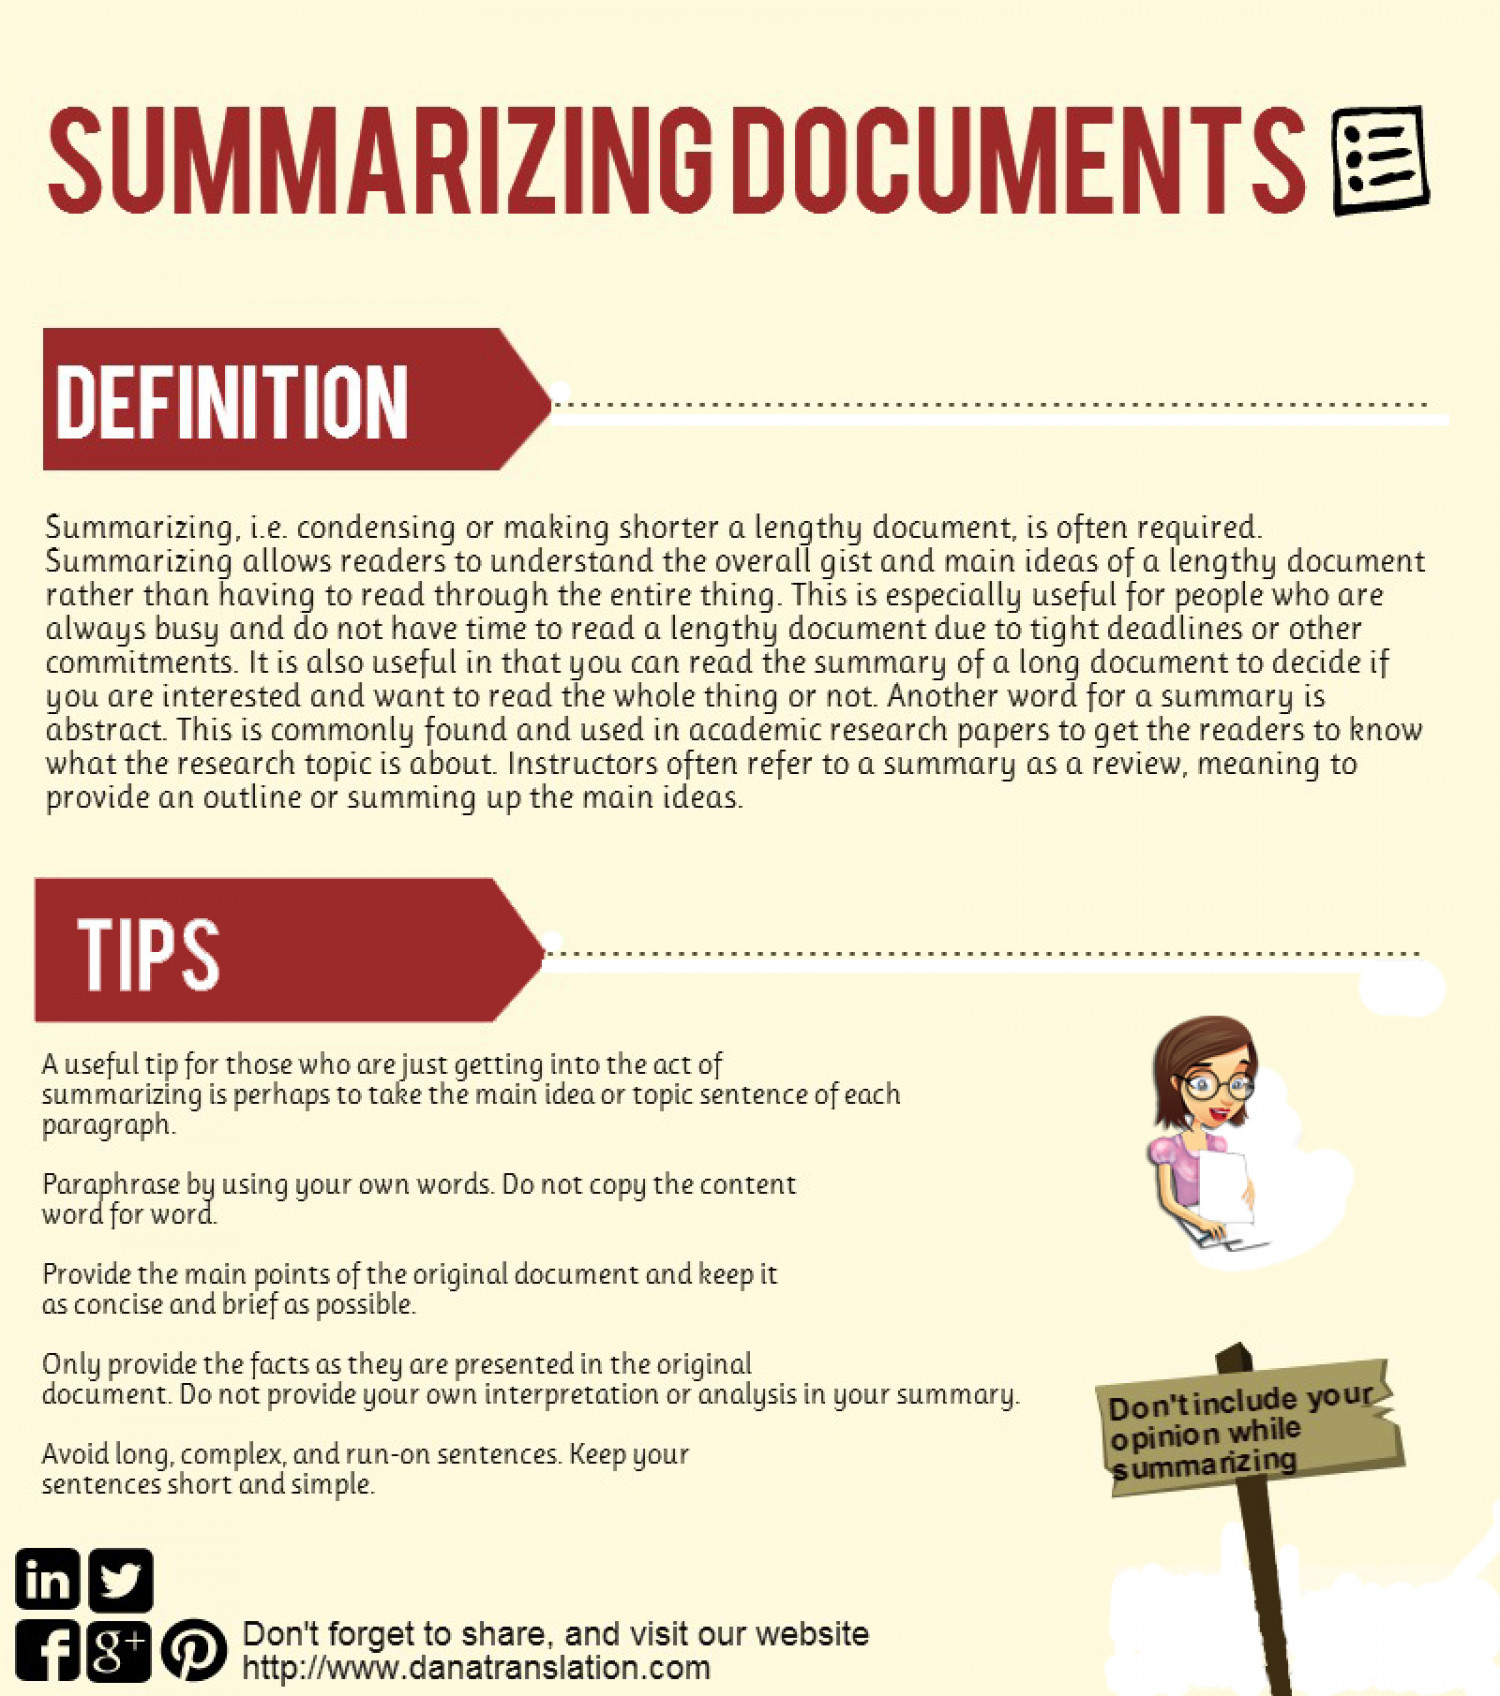 Summarizing Documents [INFOGRAPHIC] Infographic